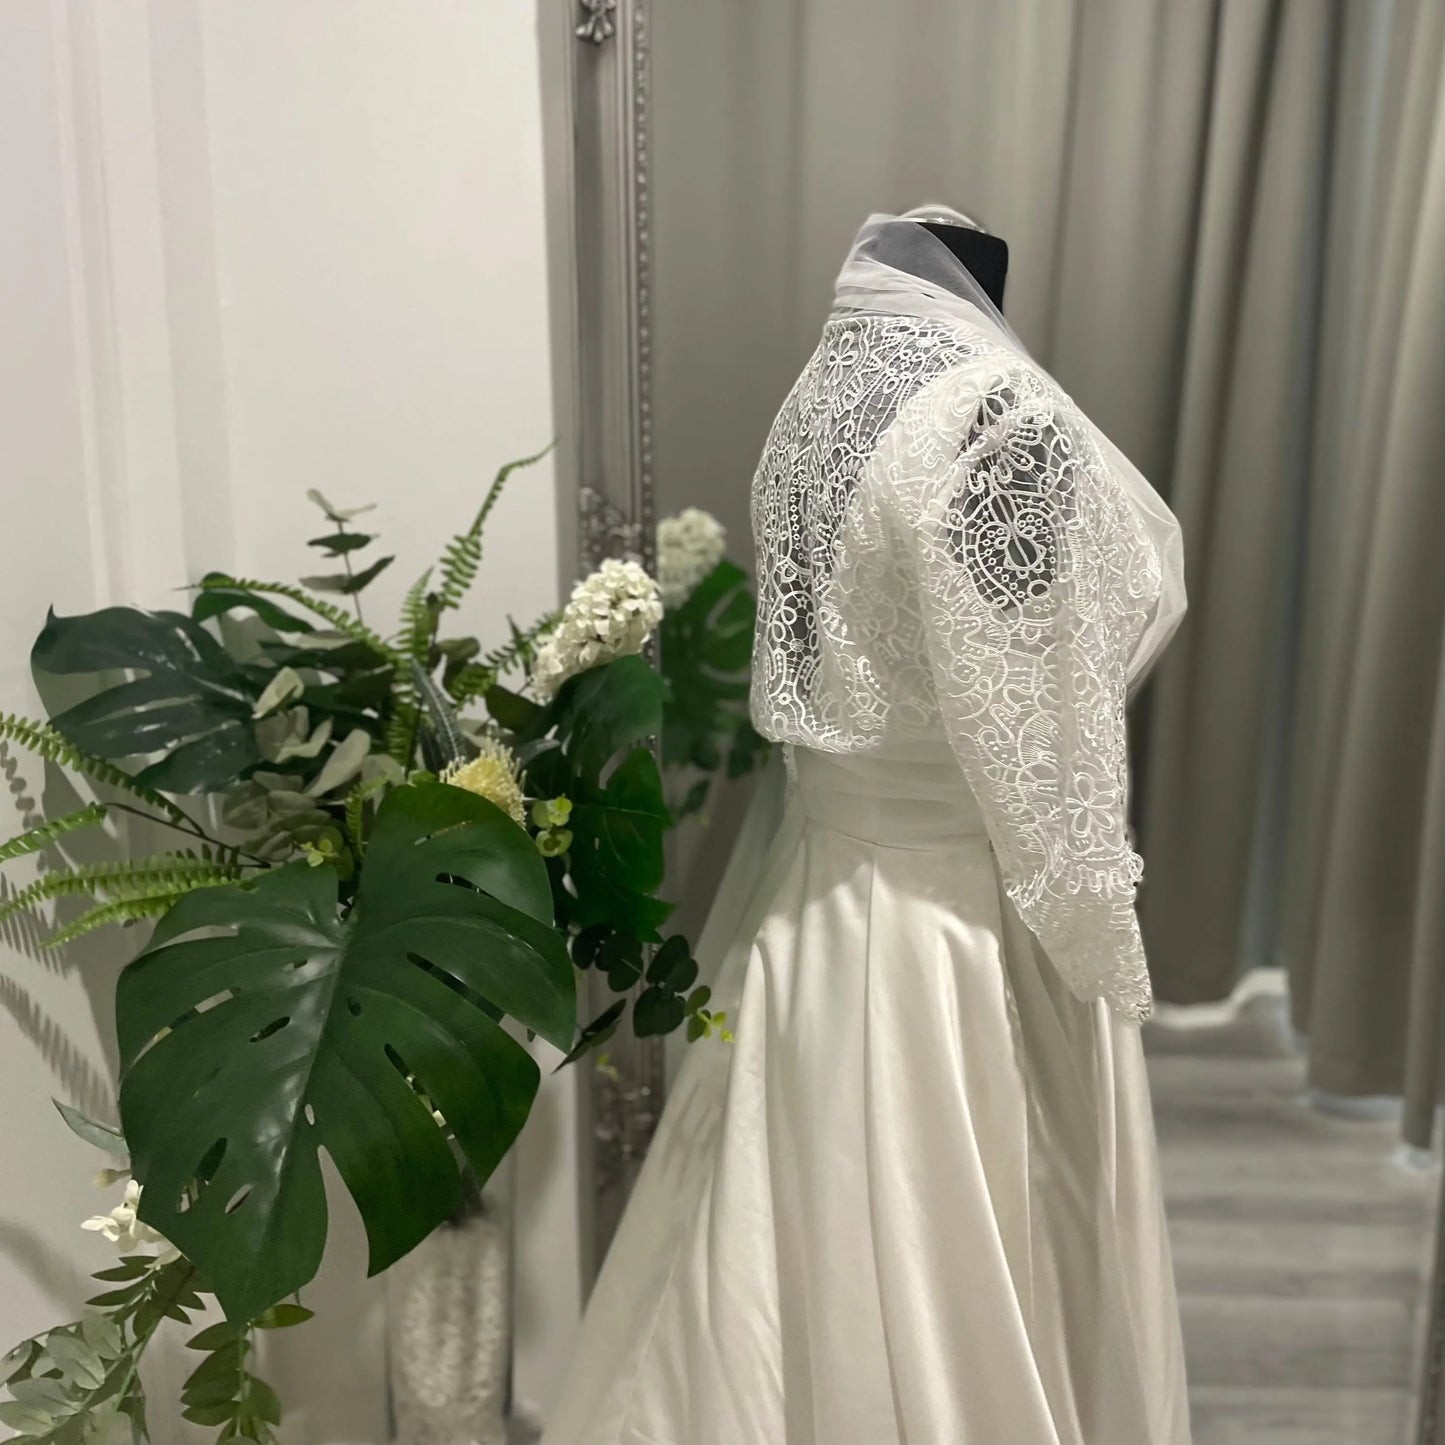 Back view of the Keira wedding bridal bolero jacket, highlighting elegant lace patterns and sheer detailing.